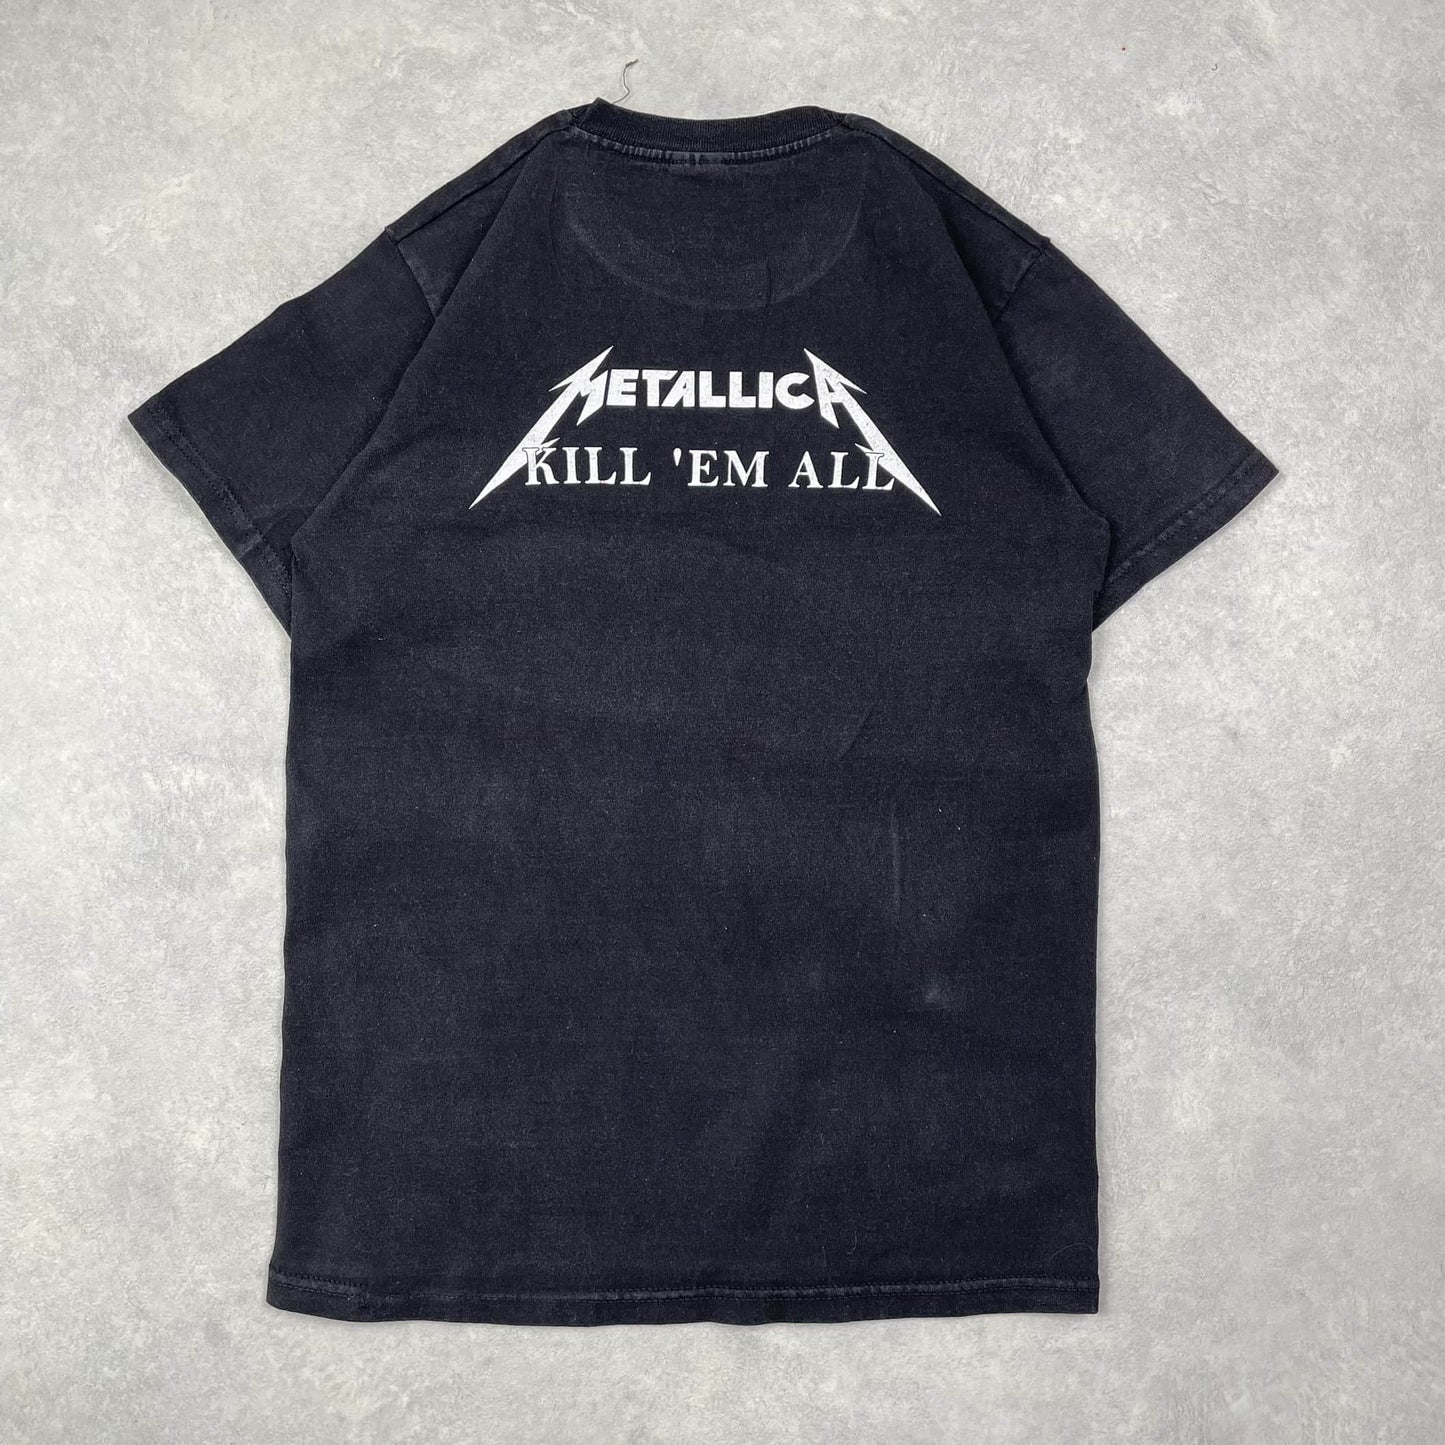 Metallica T-Shirt 00’s “Kill ‘Em All” Black Fruit of the Loom Heavy